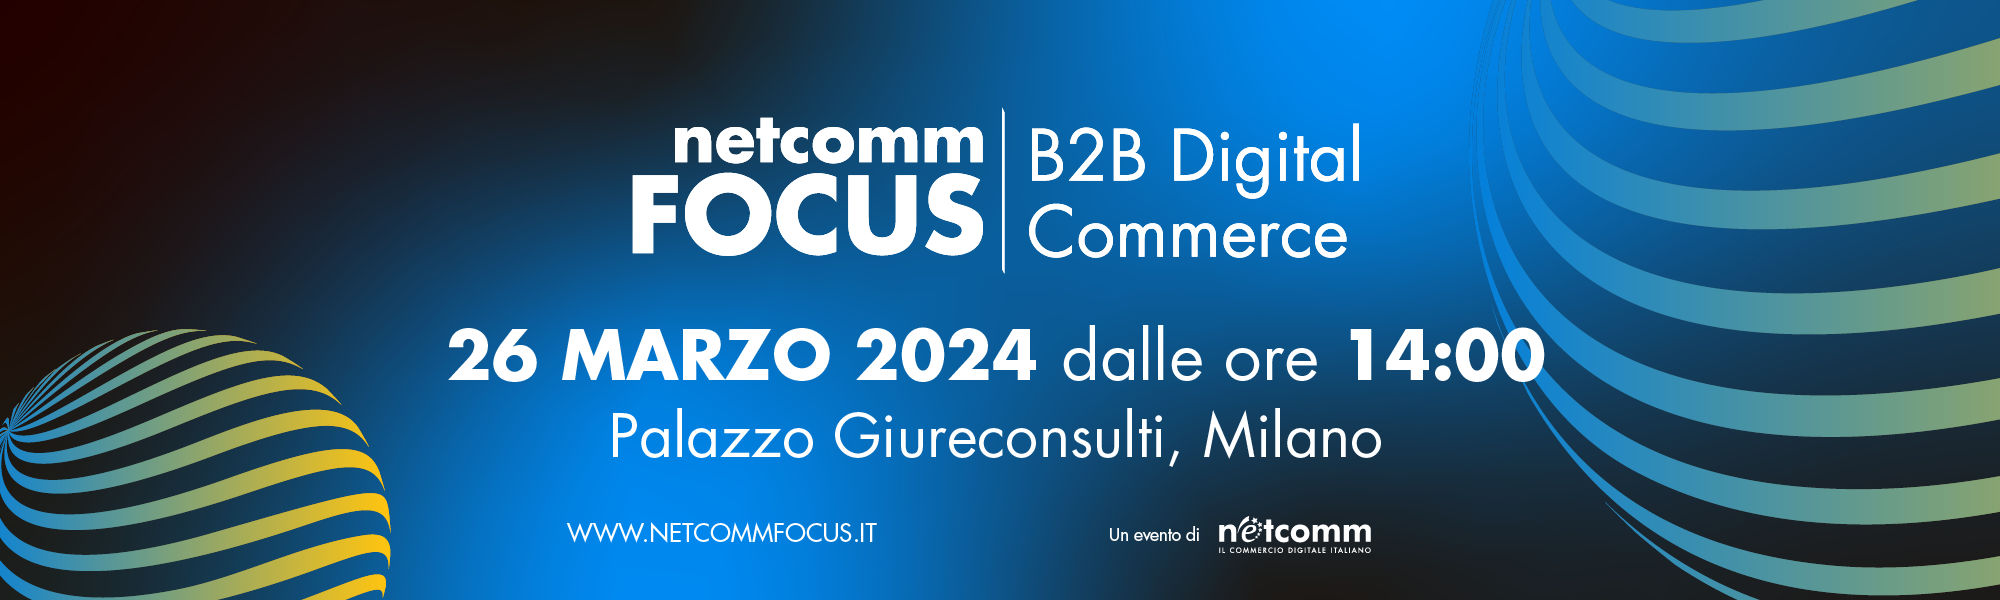 banner-netcomm-focus-b2b-digital-commerce-2024_sito